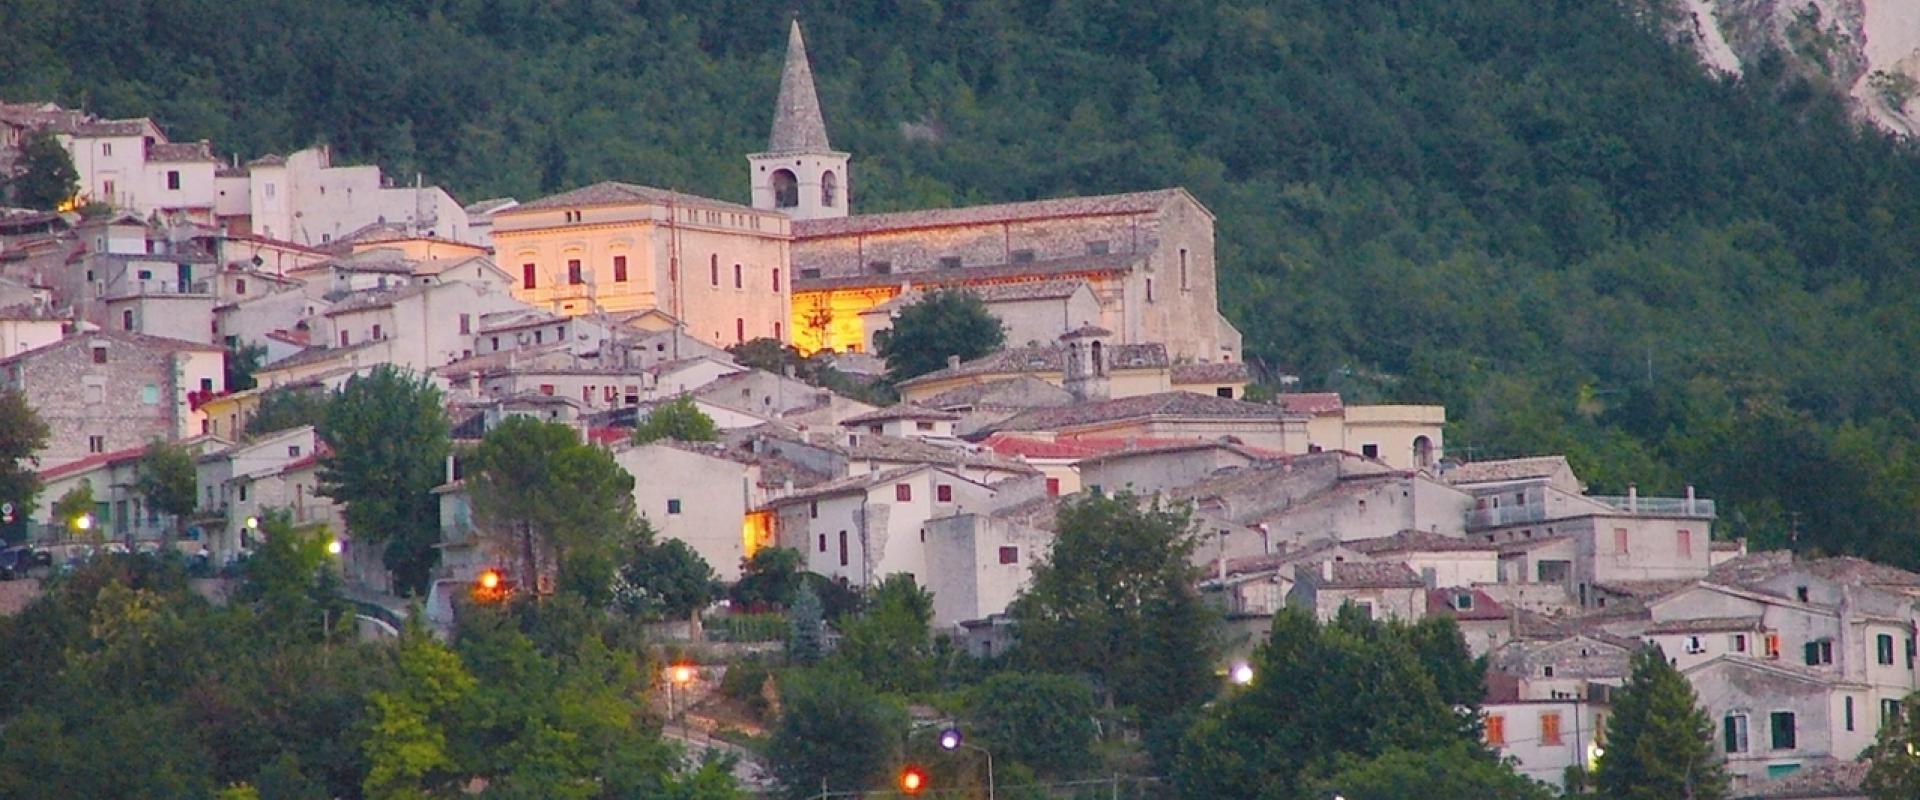 Caramanico Terme Abruzzo